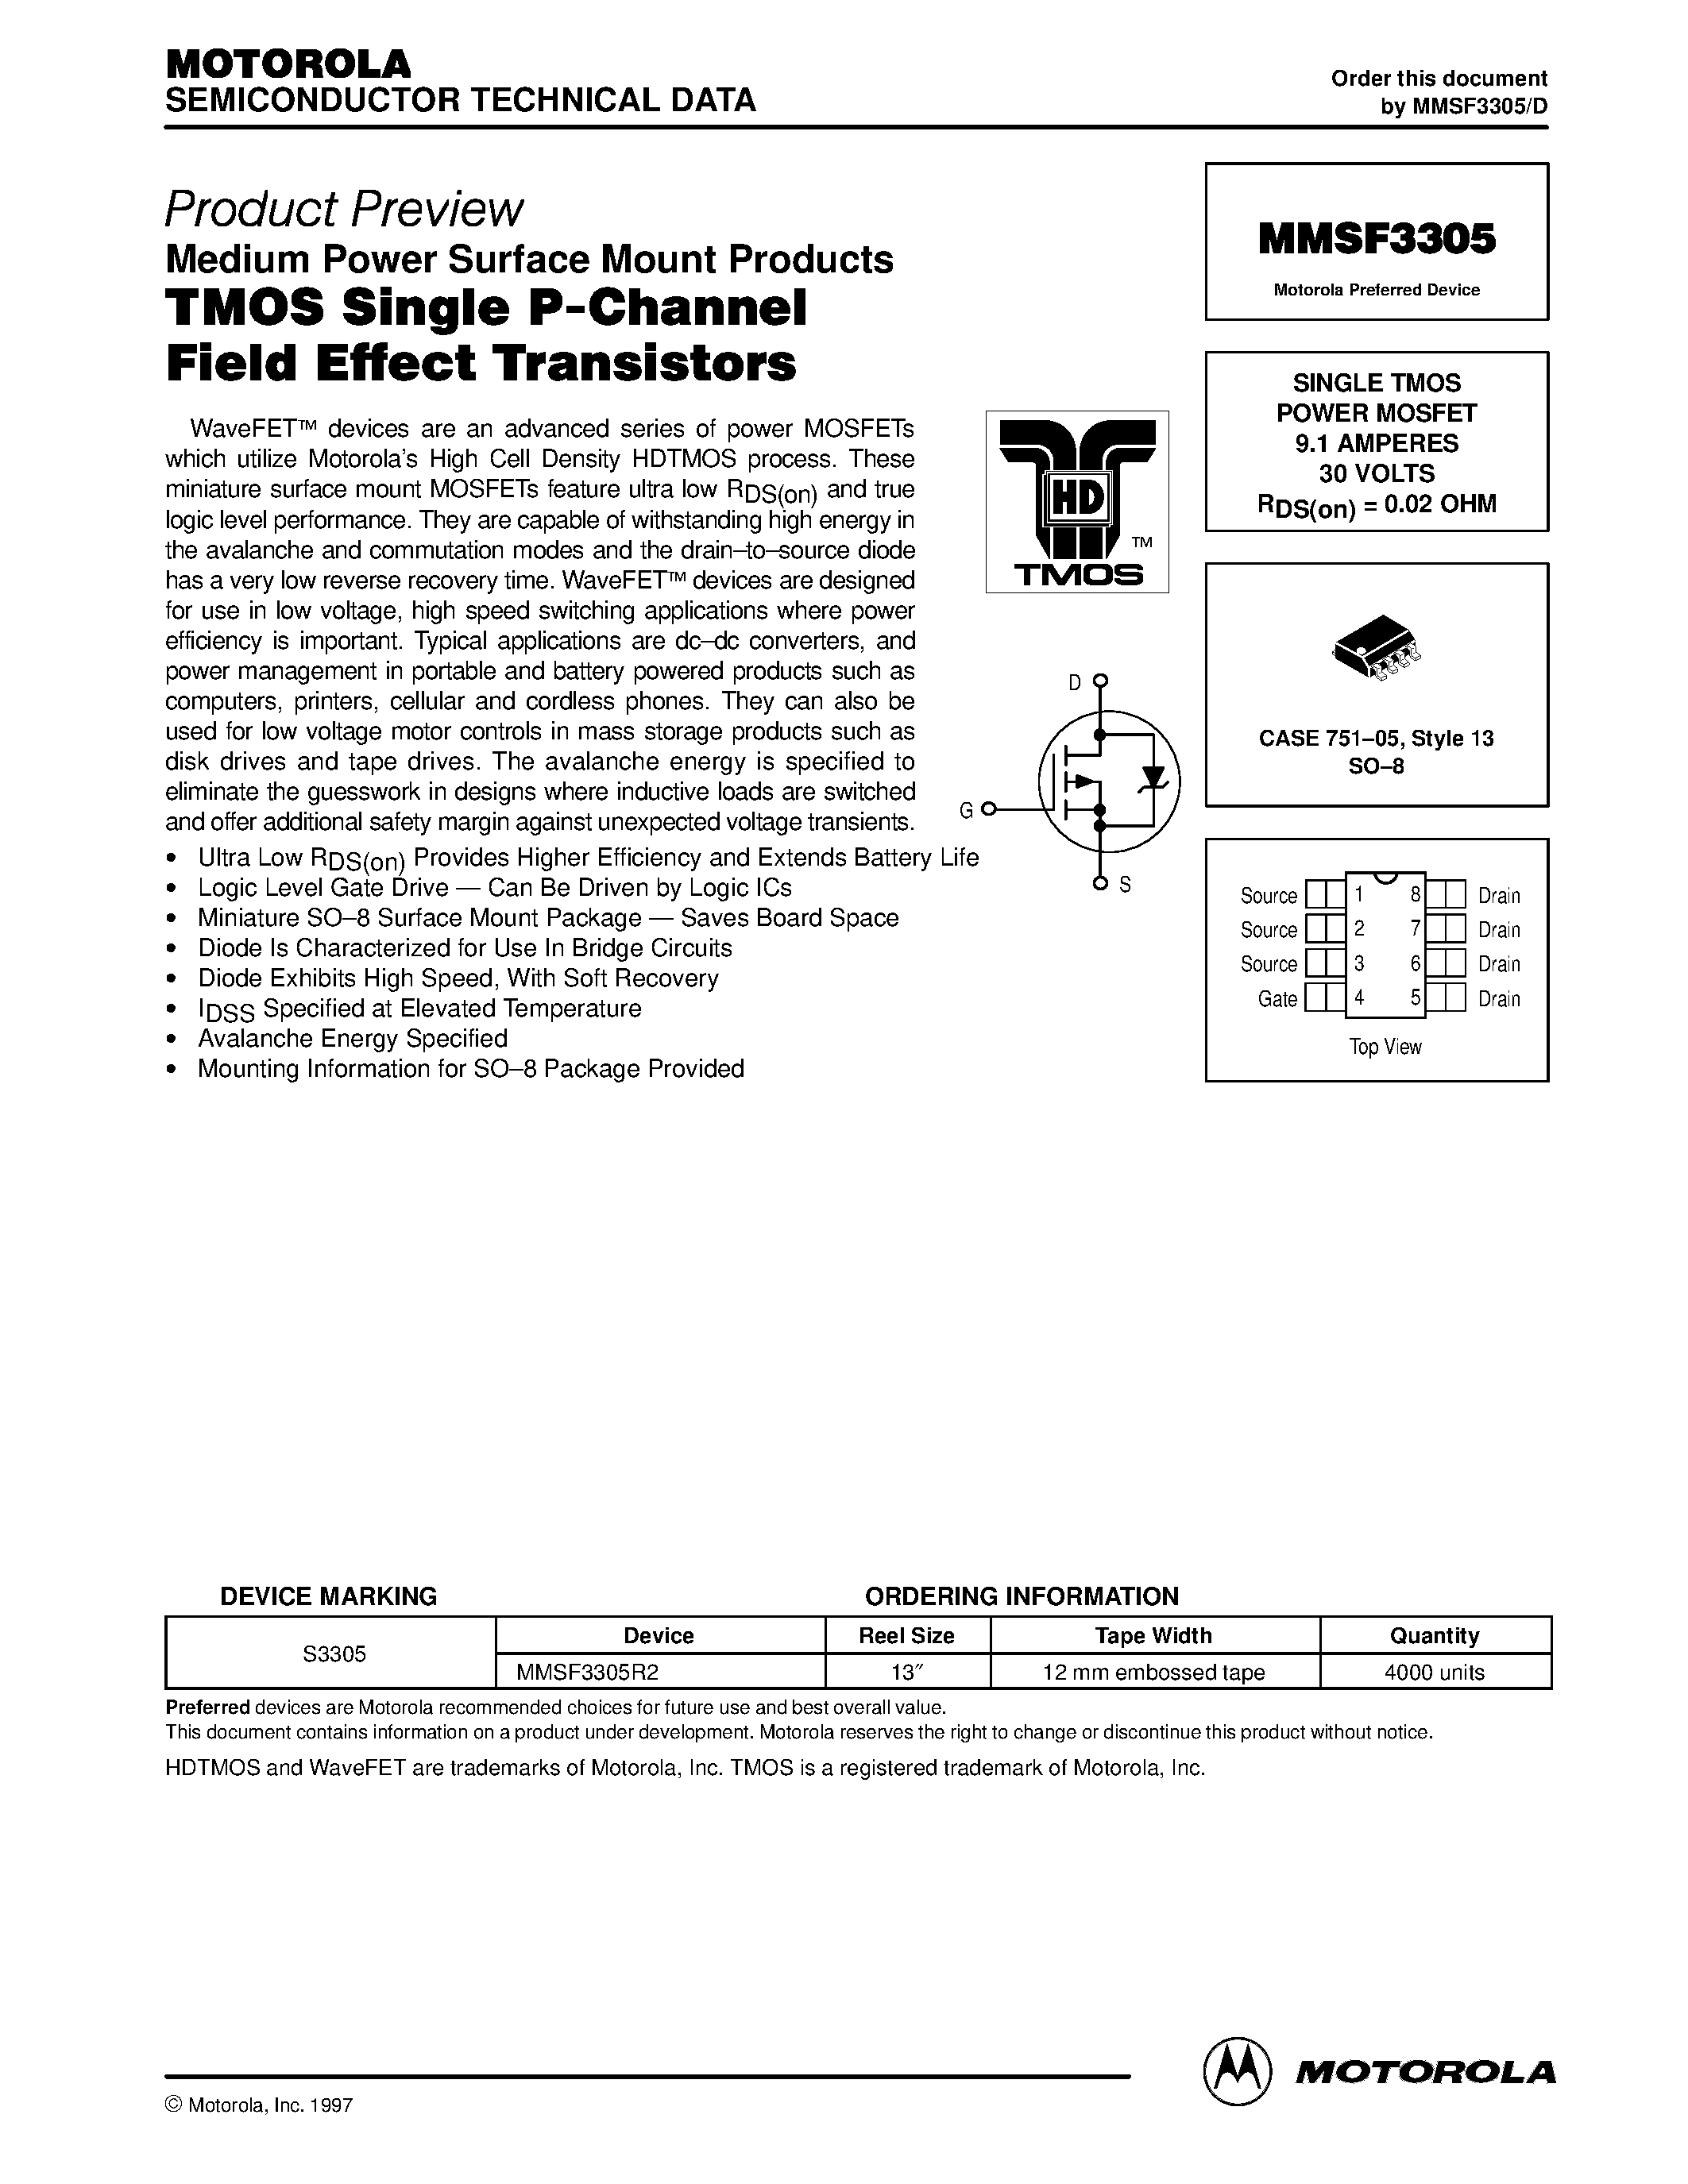 Datasheet MMSF3305 - SINGLE TMOS POWER MOSFET 9.1 AMPERES 30 VOLTS page 1